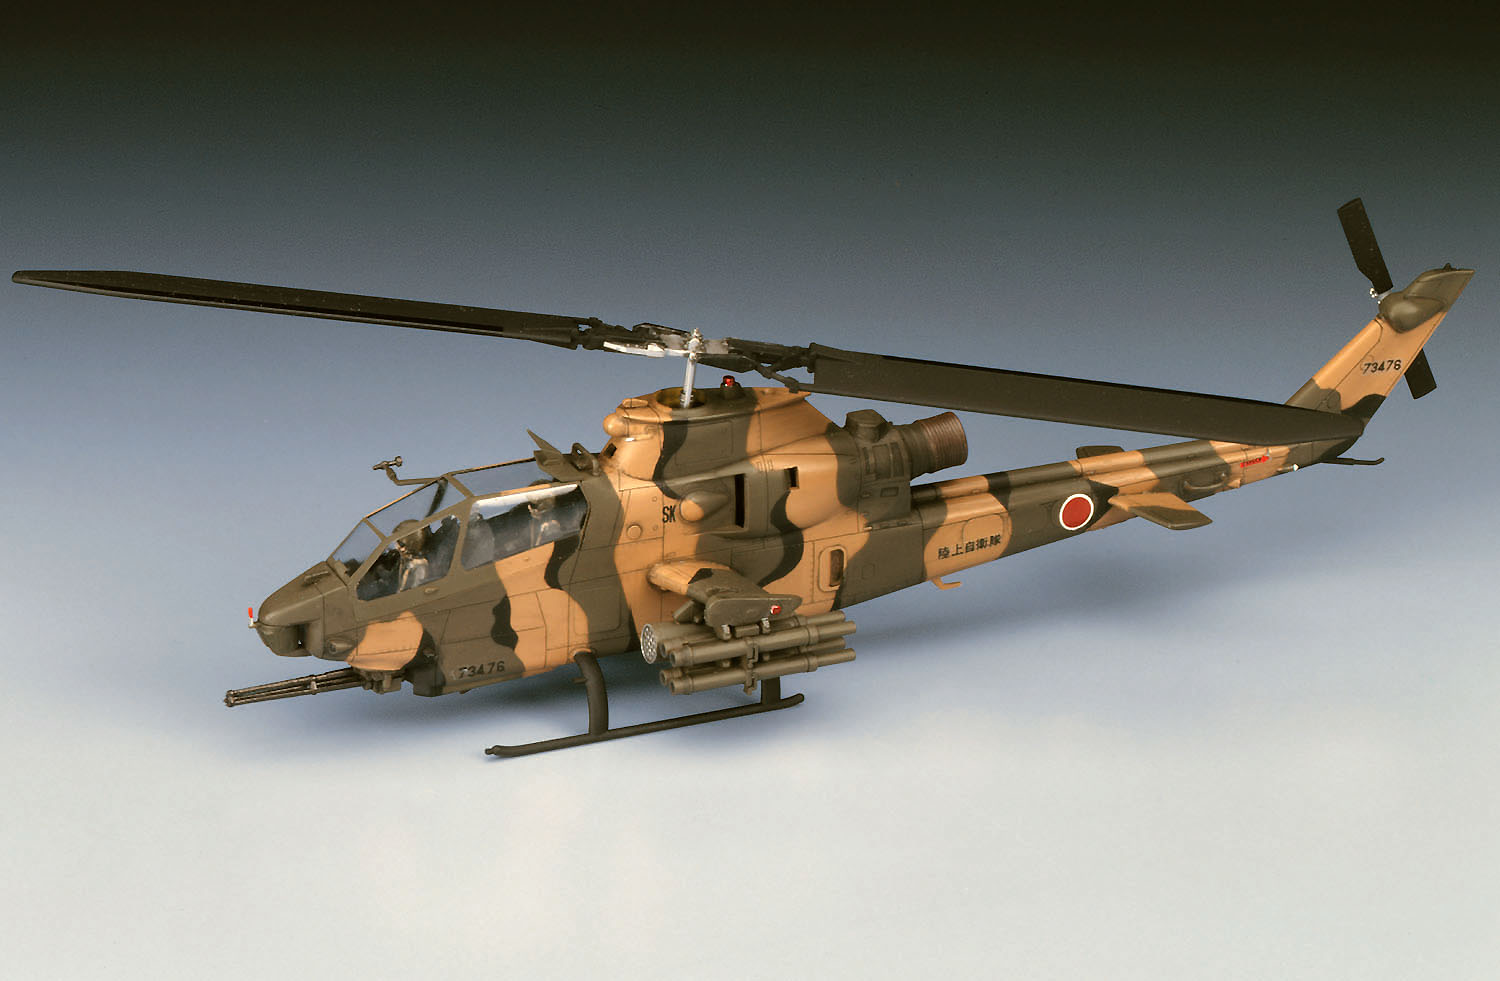 AH-1S コブラ チョッパー “陸上自衛隊” | 株式会社 ハセガワ